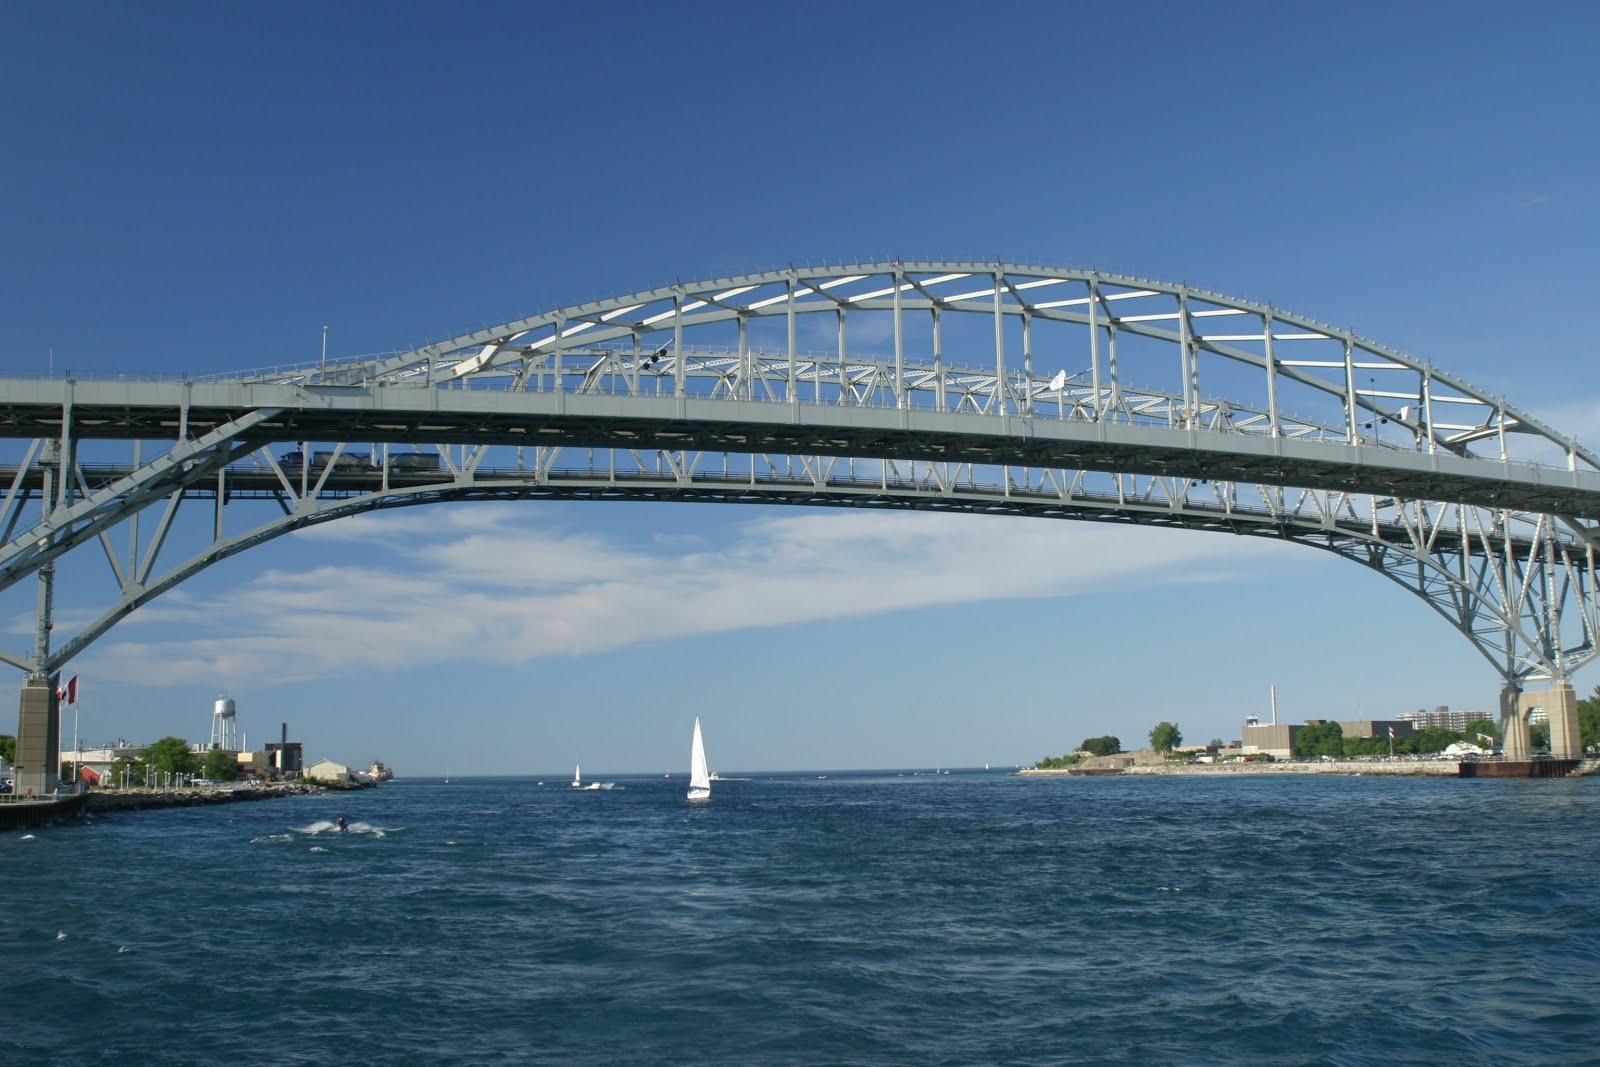 The Bluewater Bridge